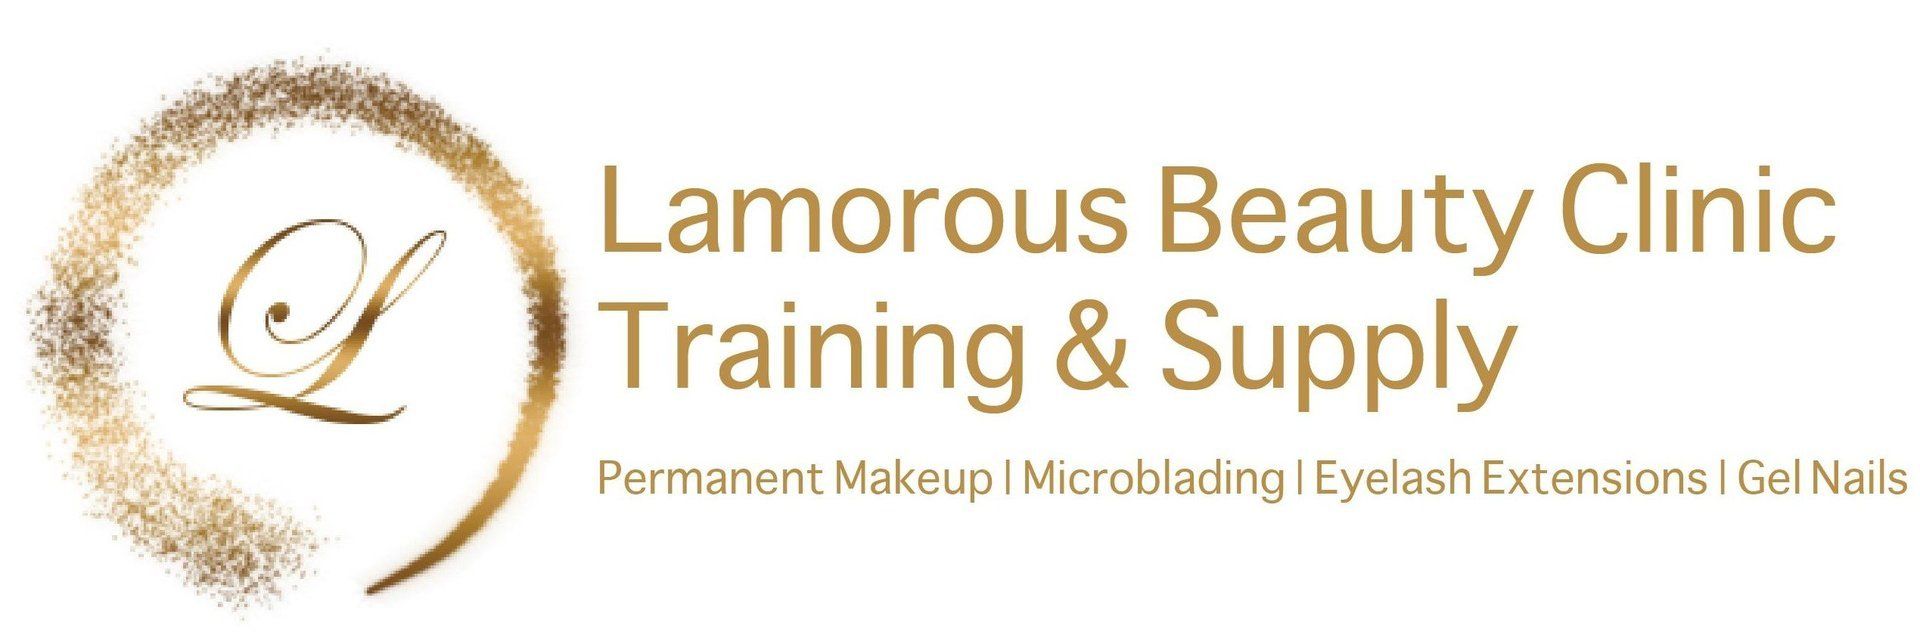 Lamorous Beauty Clinic Training & Supply